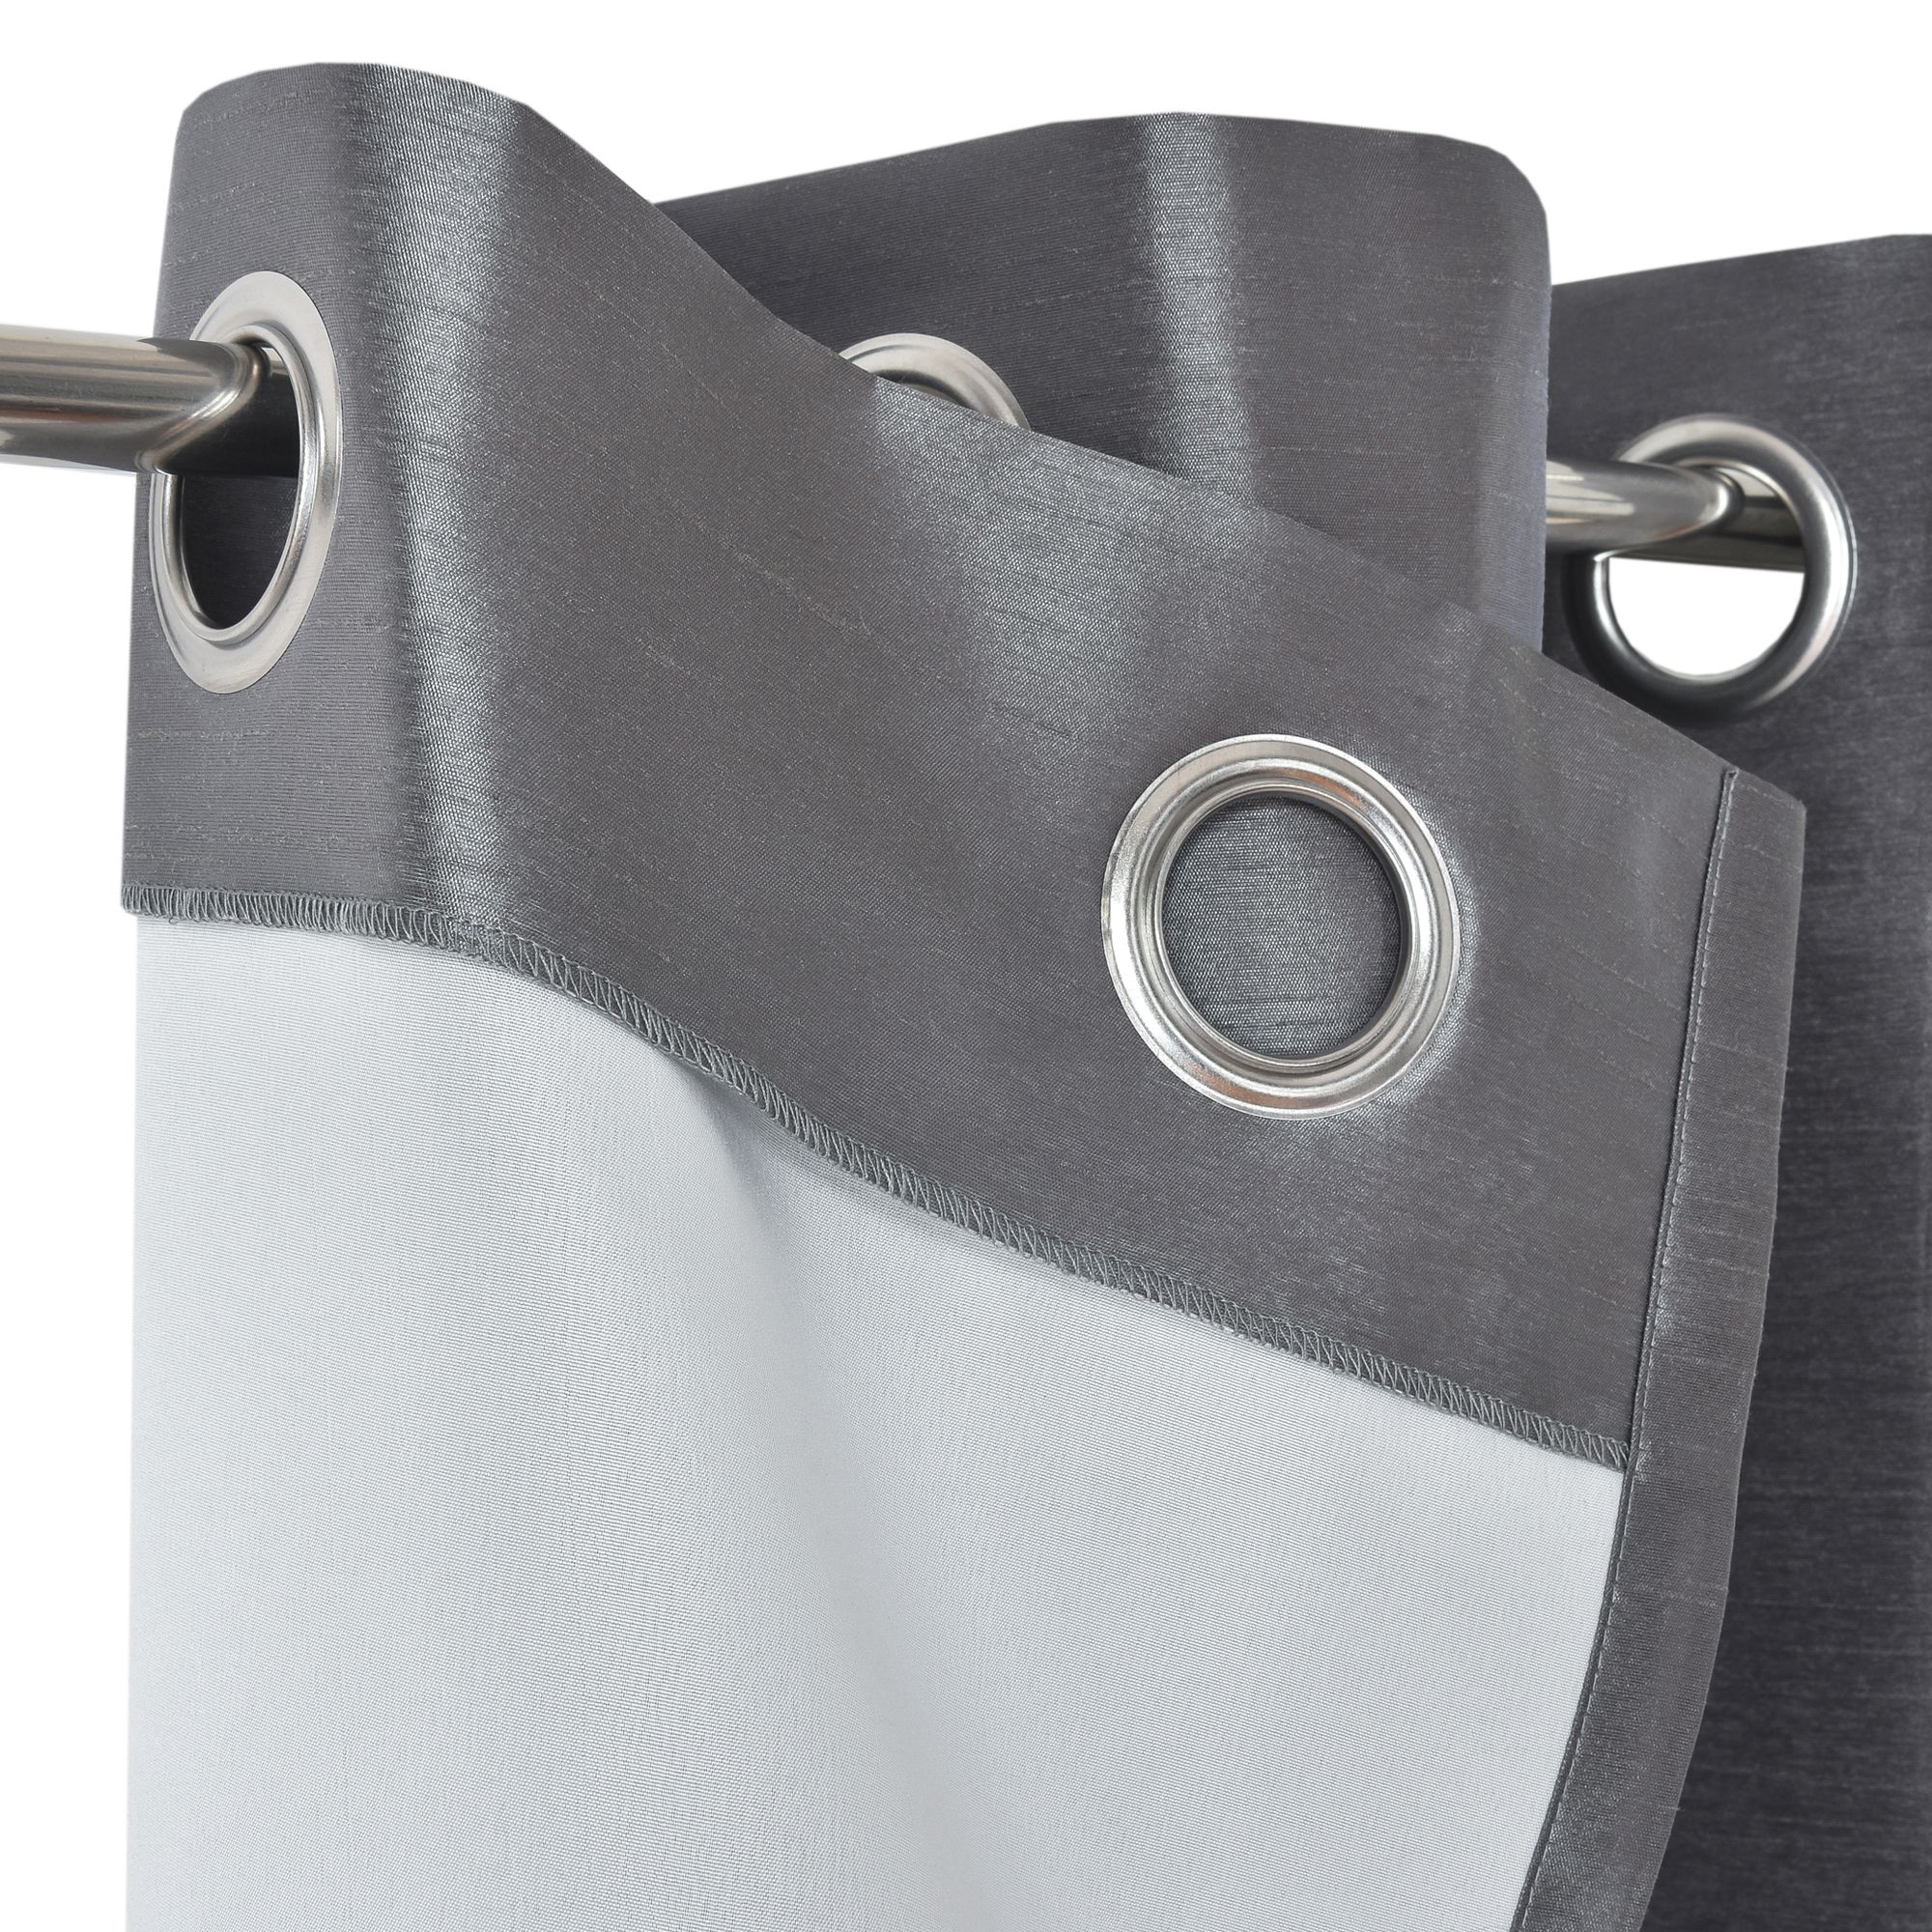 Morea Light grey Plain woven Lined Eyelet Curtain (W)228cm (L)228cm, Pair